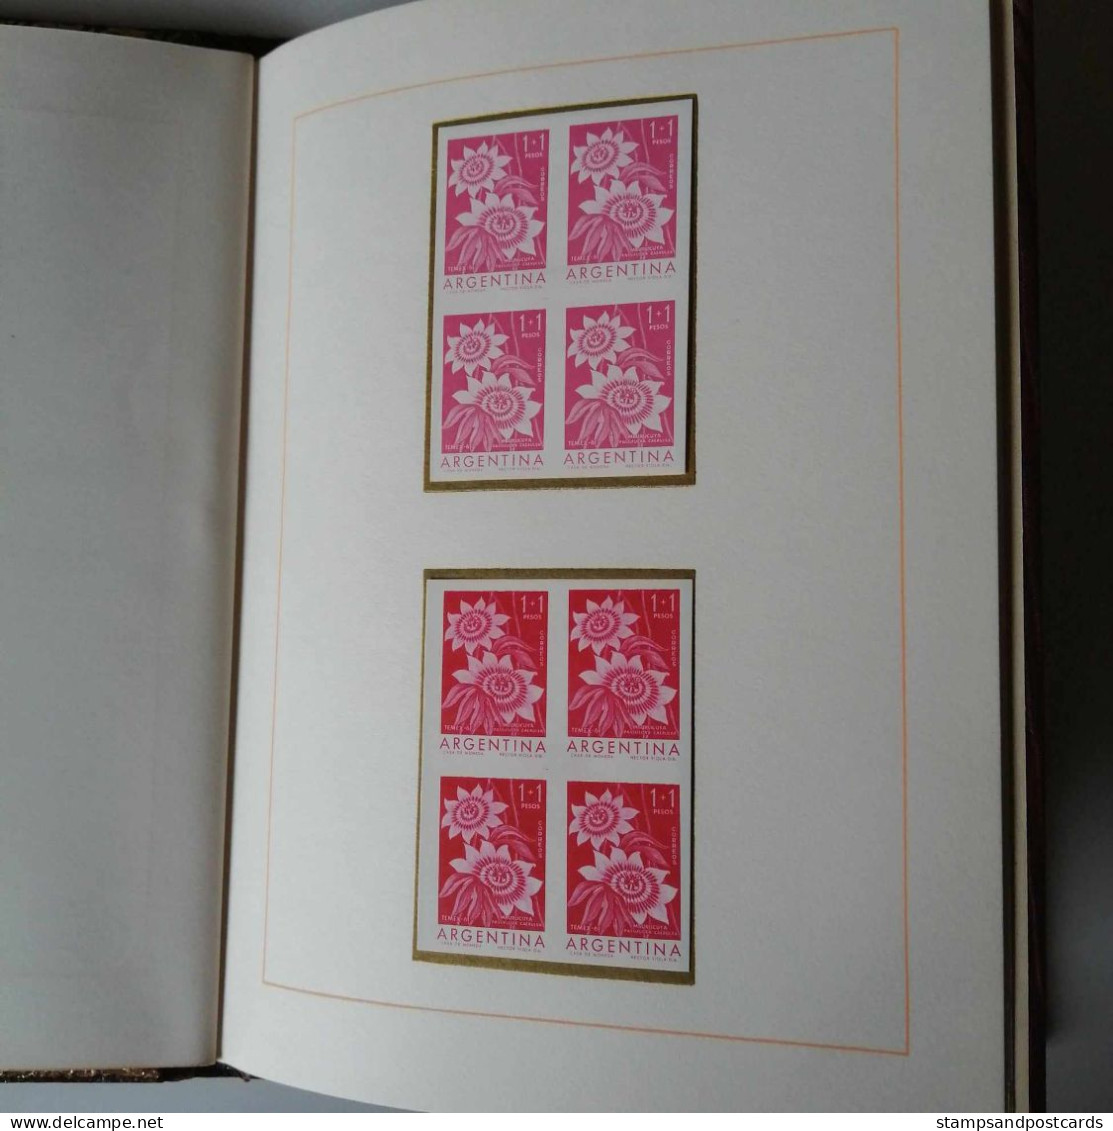 Argentina Flowers Temex 1961 official book with imperforated color proofs + overprints Argentine livre preuves Fleurs